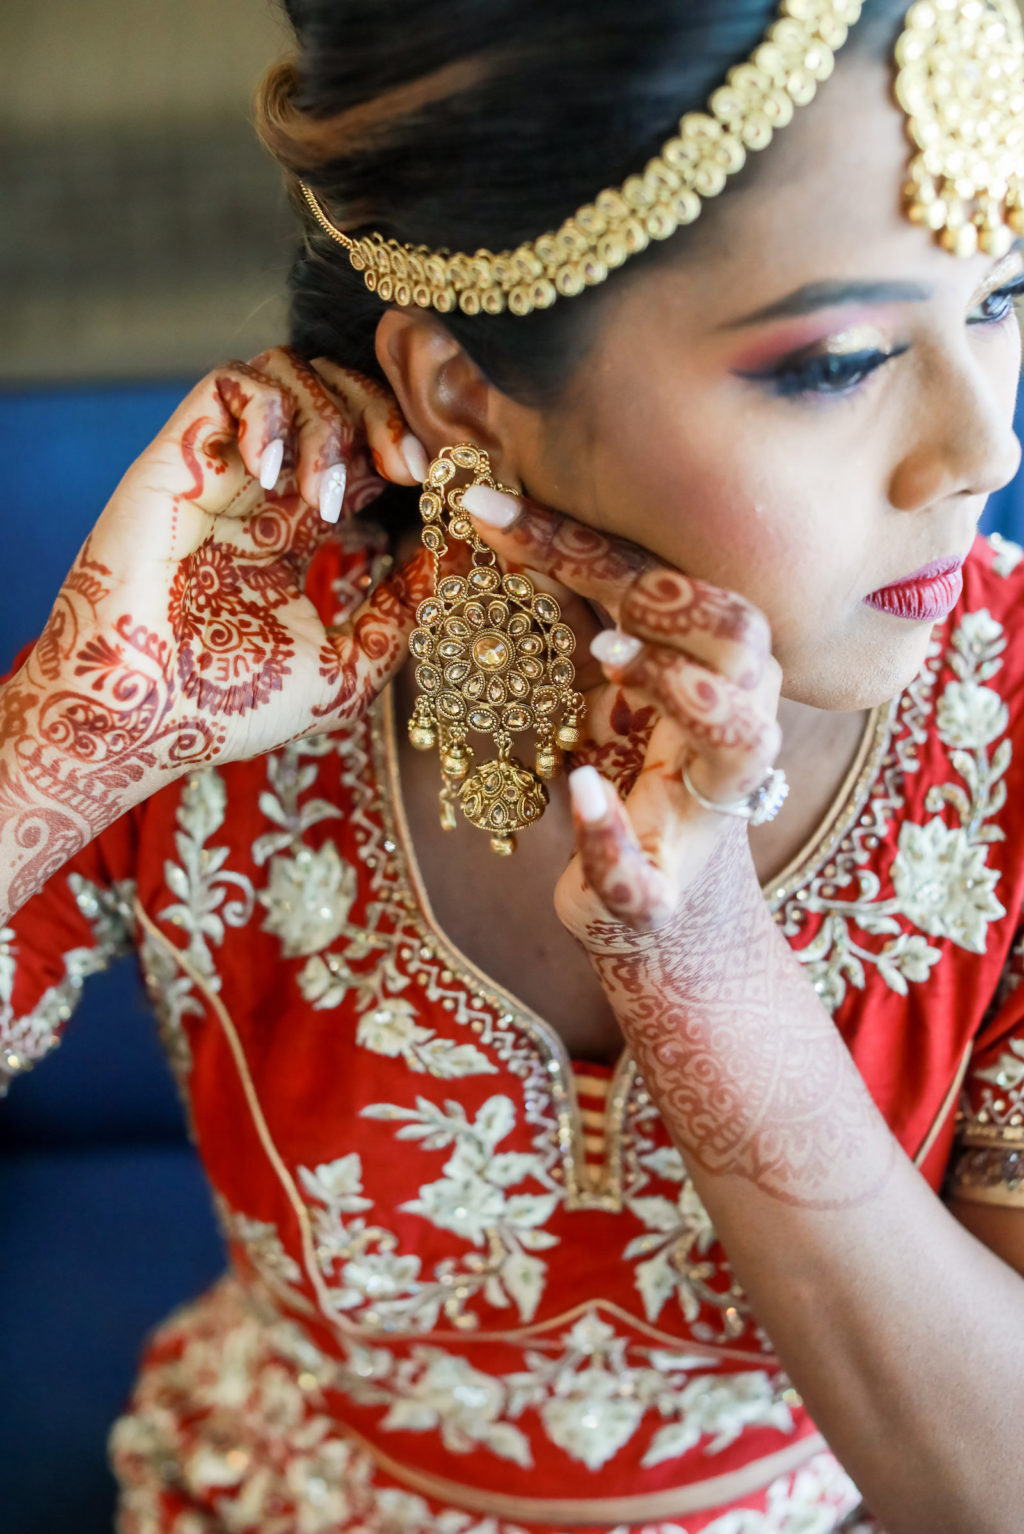 Hindu Indian Bride Getting Wedding Ready Putting on Elaborate Gold Dangle Earrings and Gold Headpiece | Tampa Bay Wedding Photographer Lifelong Photography Studios